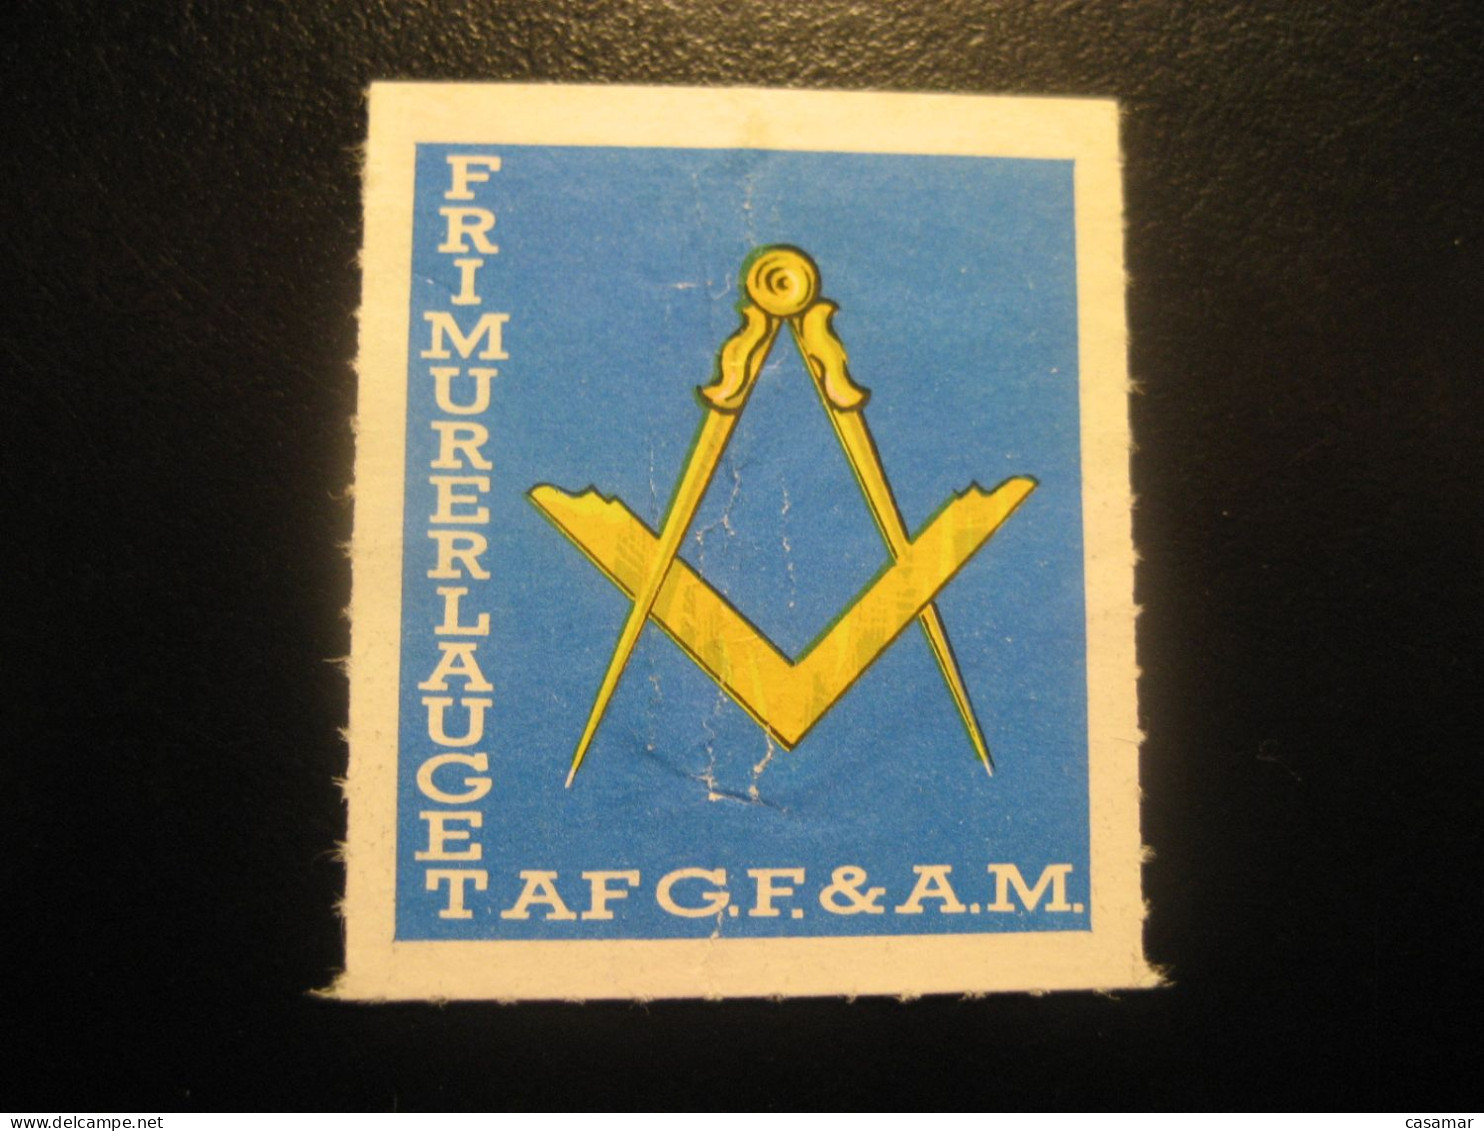 Frimurerlauget AF G.F. & A.M. Freemasonry Masonry Masonic Lodge Perces Zig Zag Poster Stamp Vignette DENMARK Label - Franc-Maçonnerie